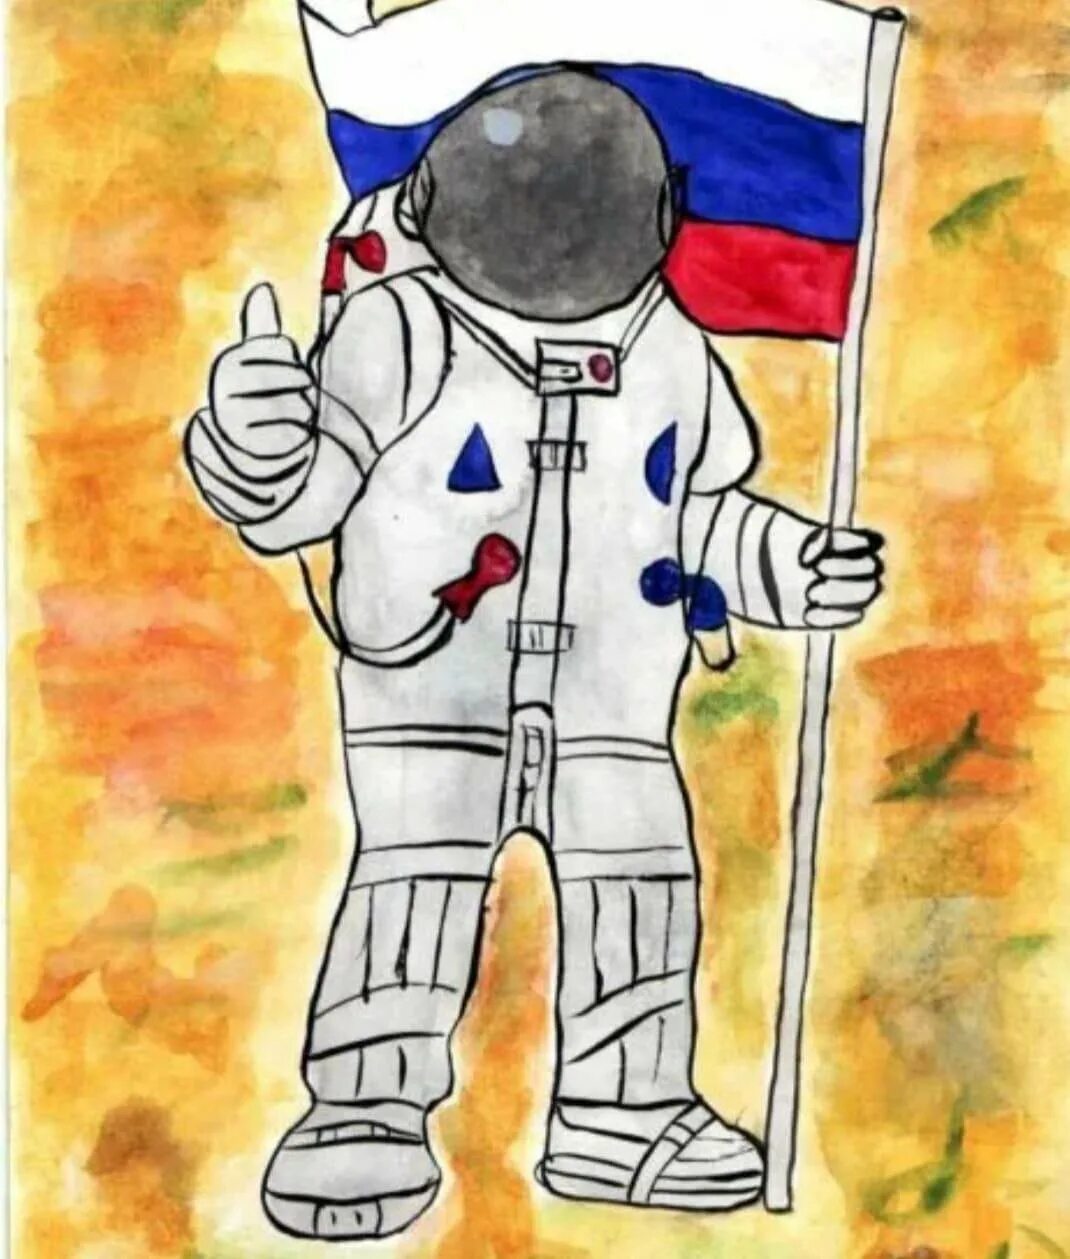 Рисунок на тему космонавт. Рисунок на тему космонавтики. Рисунок ко Дню космонавтики. Рисунок на тему день космонавтики. Рисунок на день Космонавта.